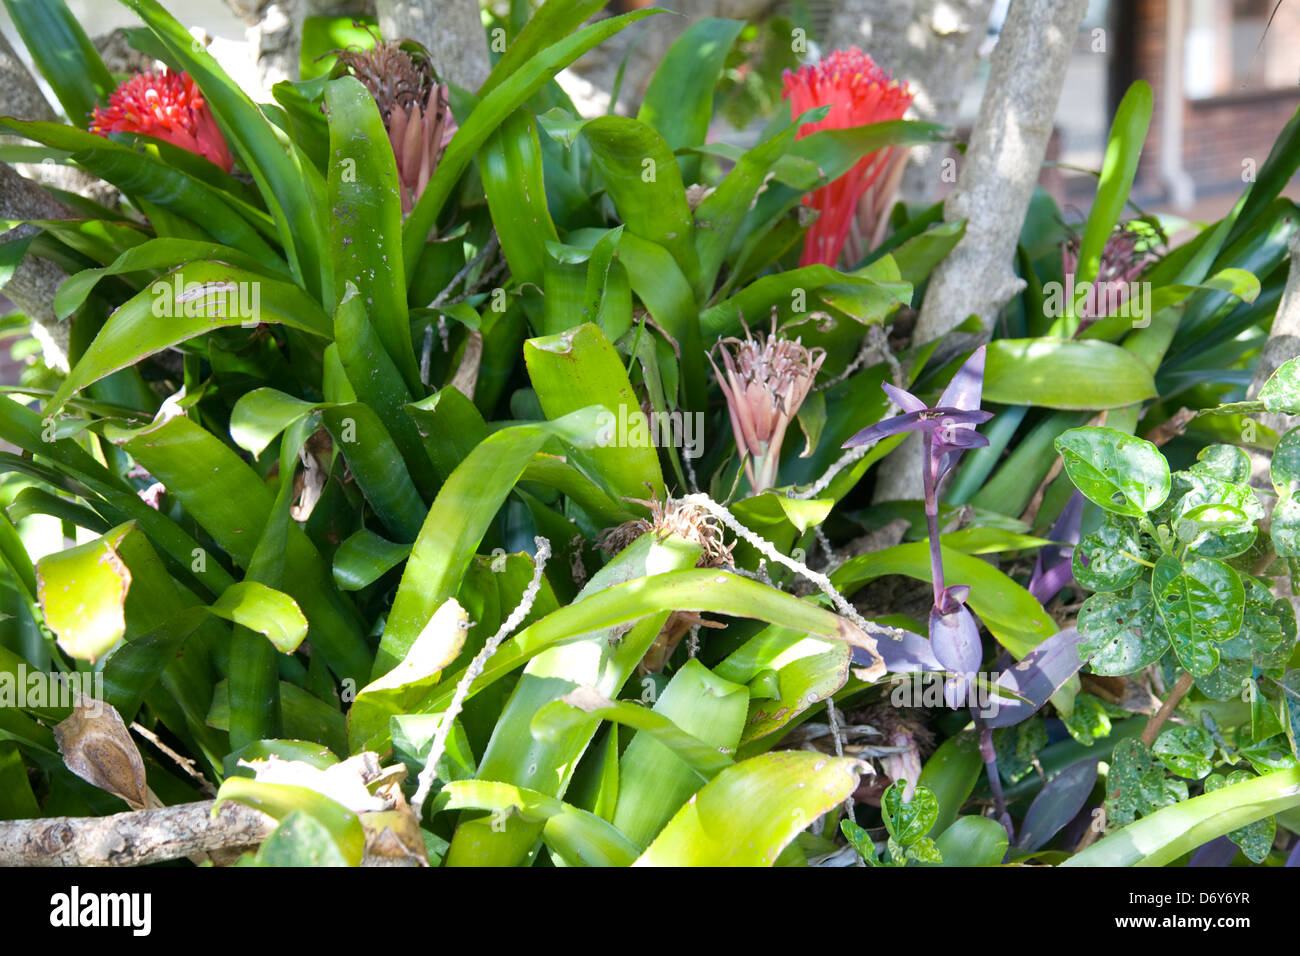 bromeliad plants with red flowers in sydney,Australia Stock Photo